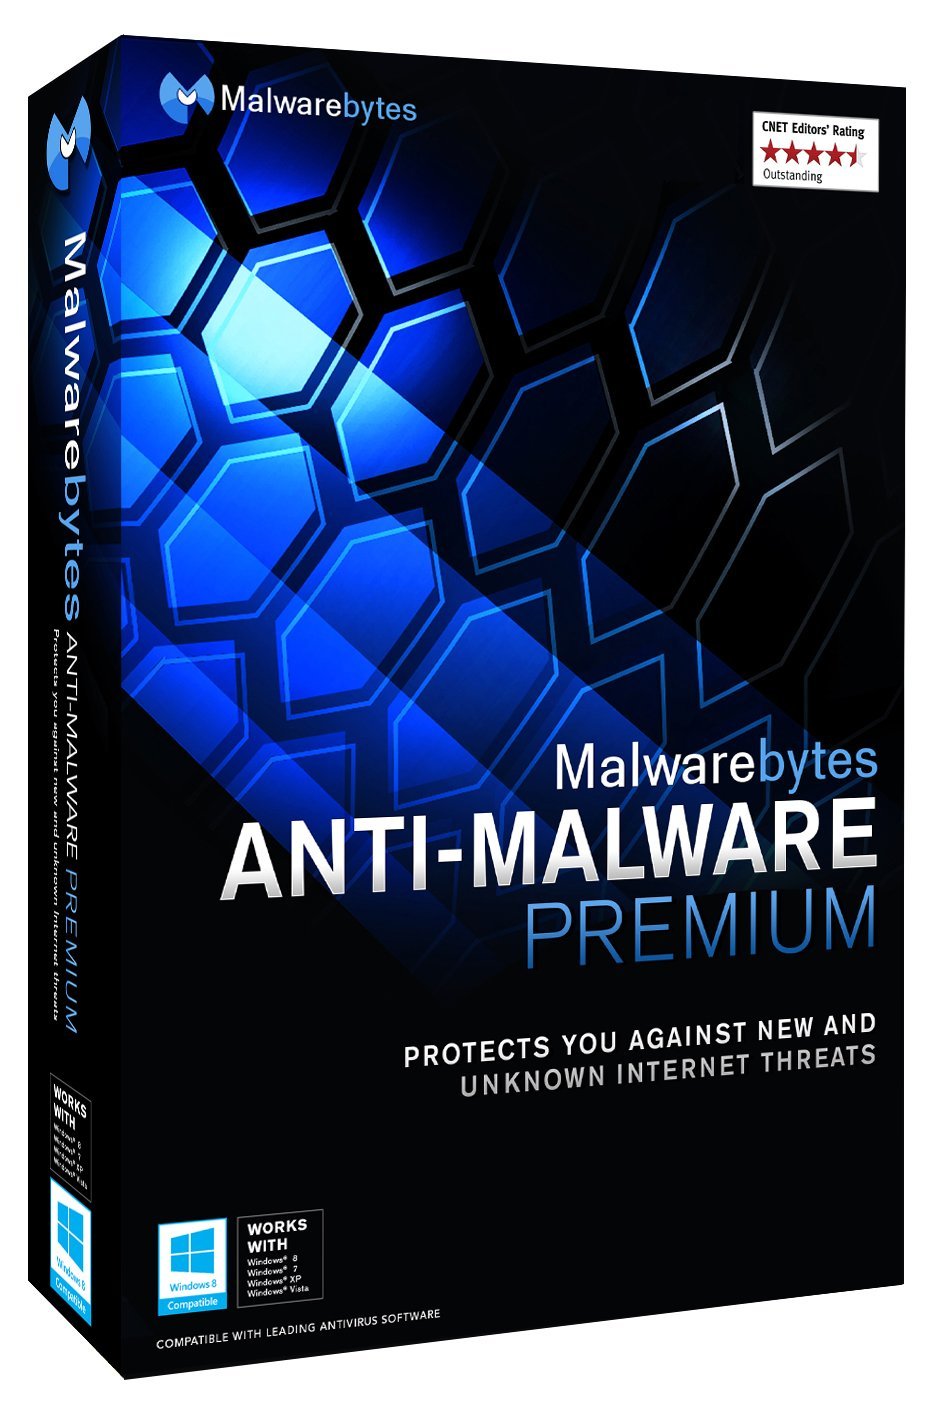 malwarebytes anti malware 2.0 4 download